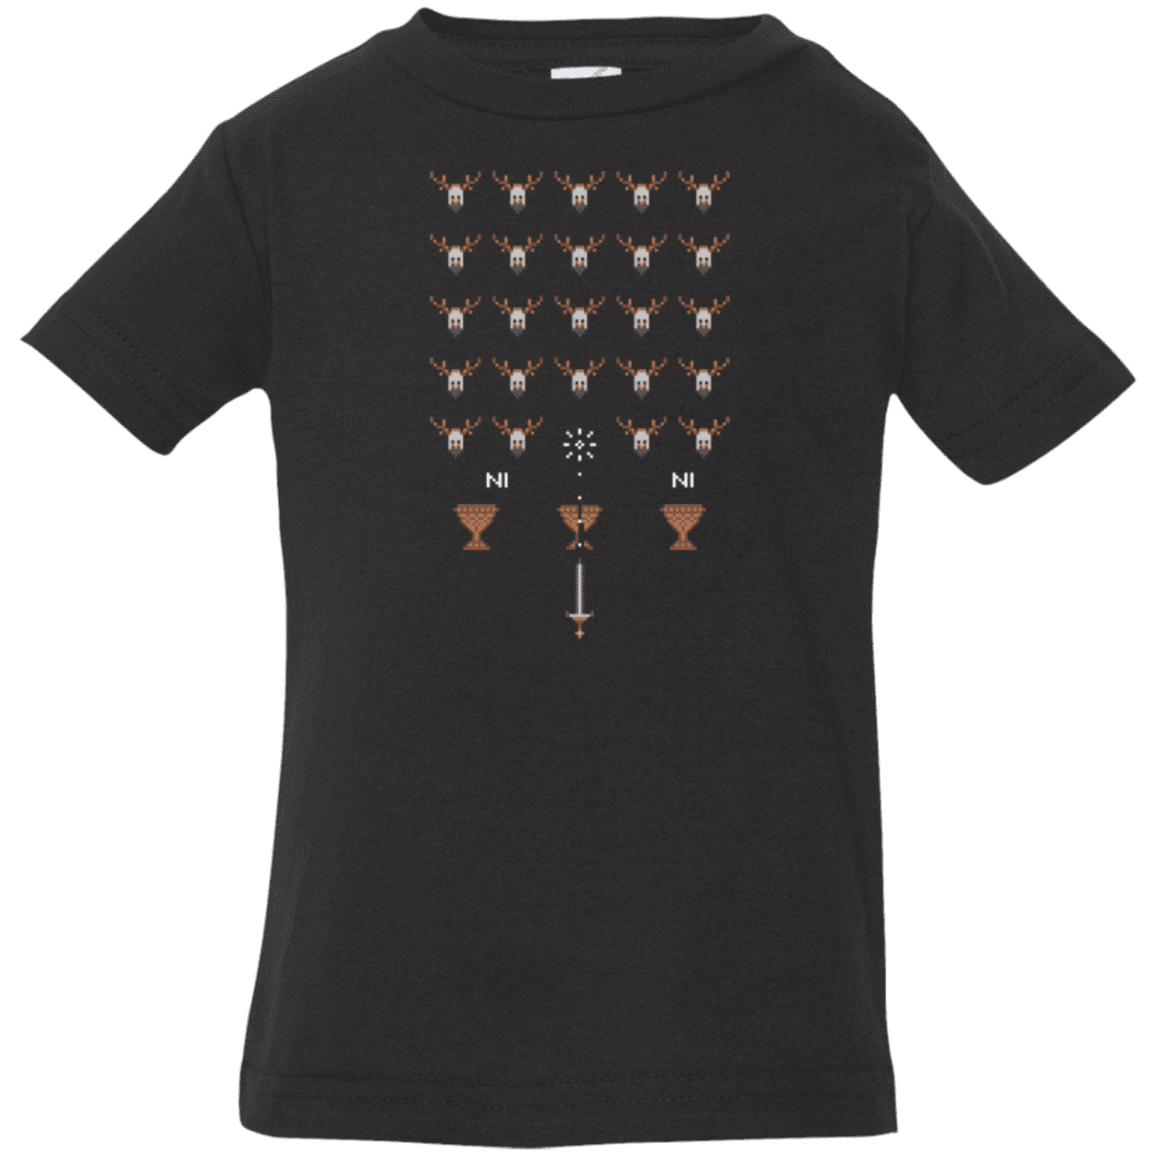 T-Shirts Black / 6 Months Space NI Invaders Infant Premium T-Shirt